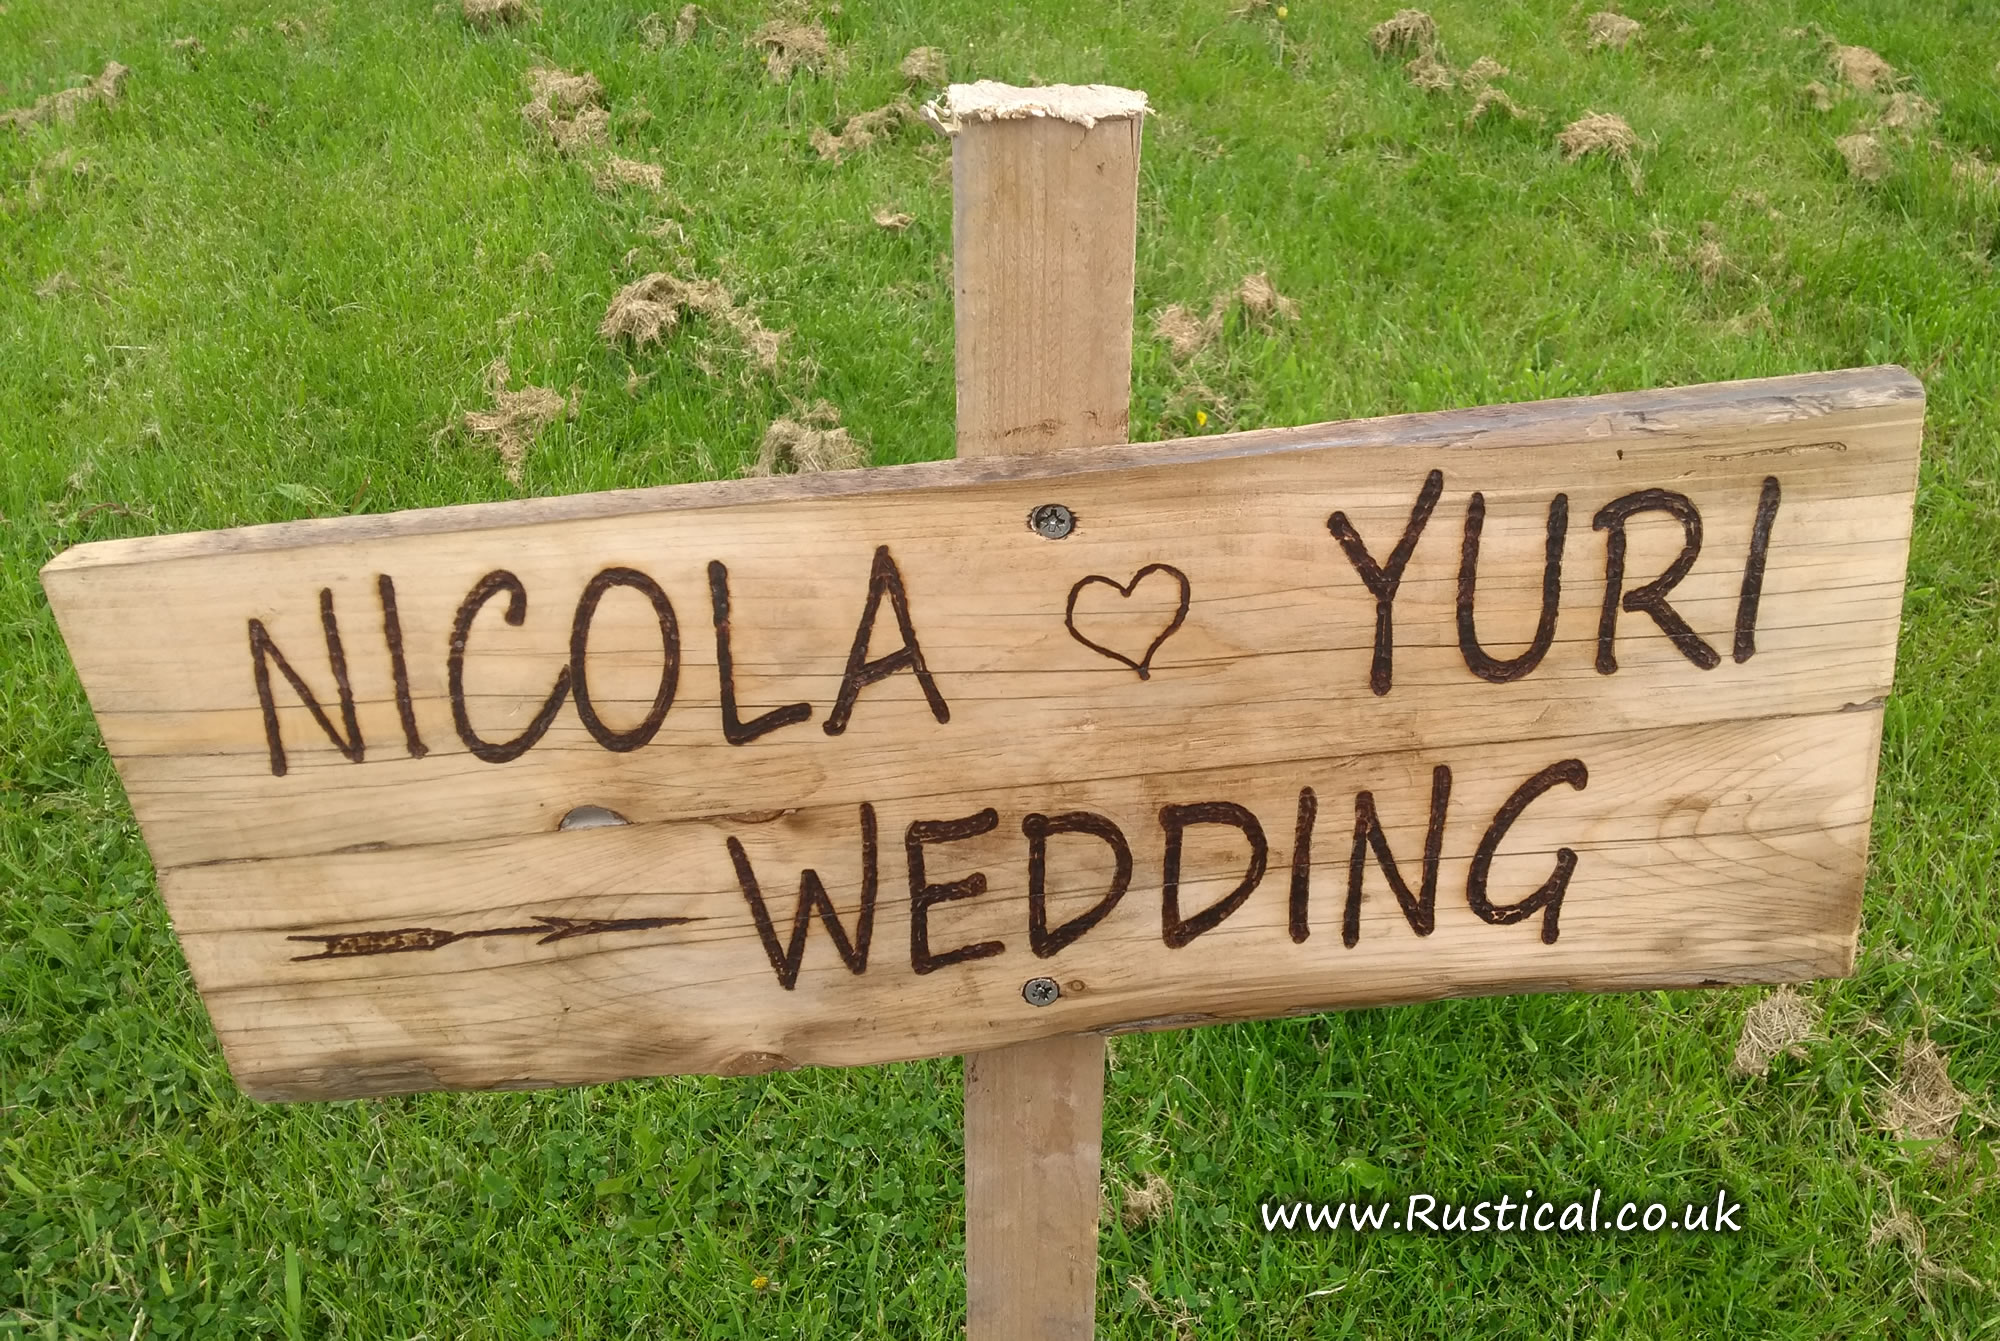 Rustic Wedding Sign for Nicola and Yuri